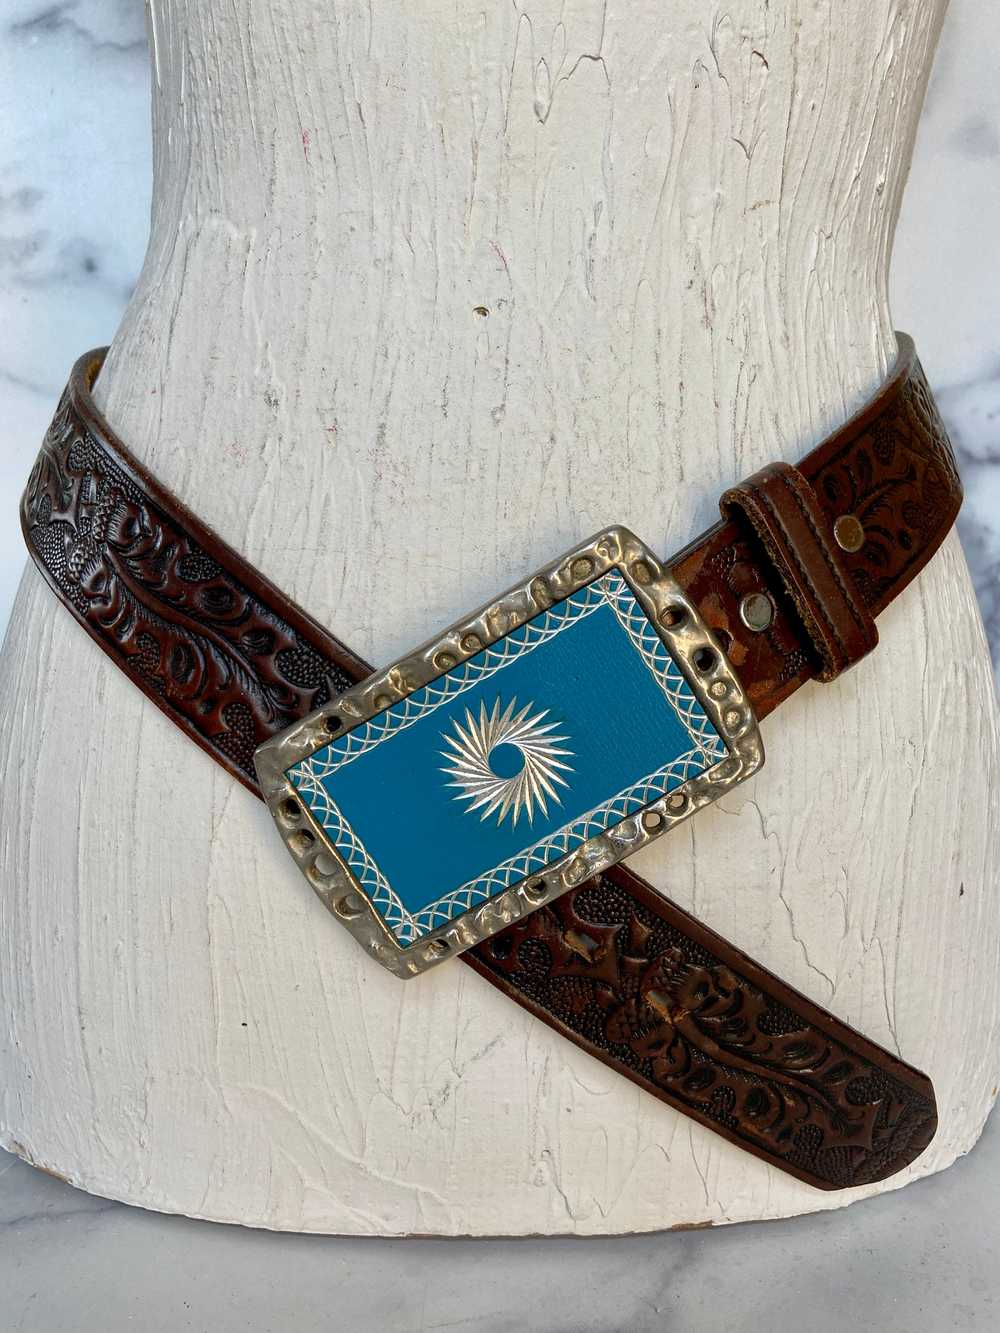 Vintage tooled leather belt - image 1